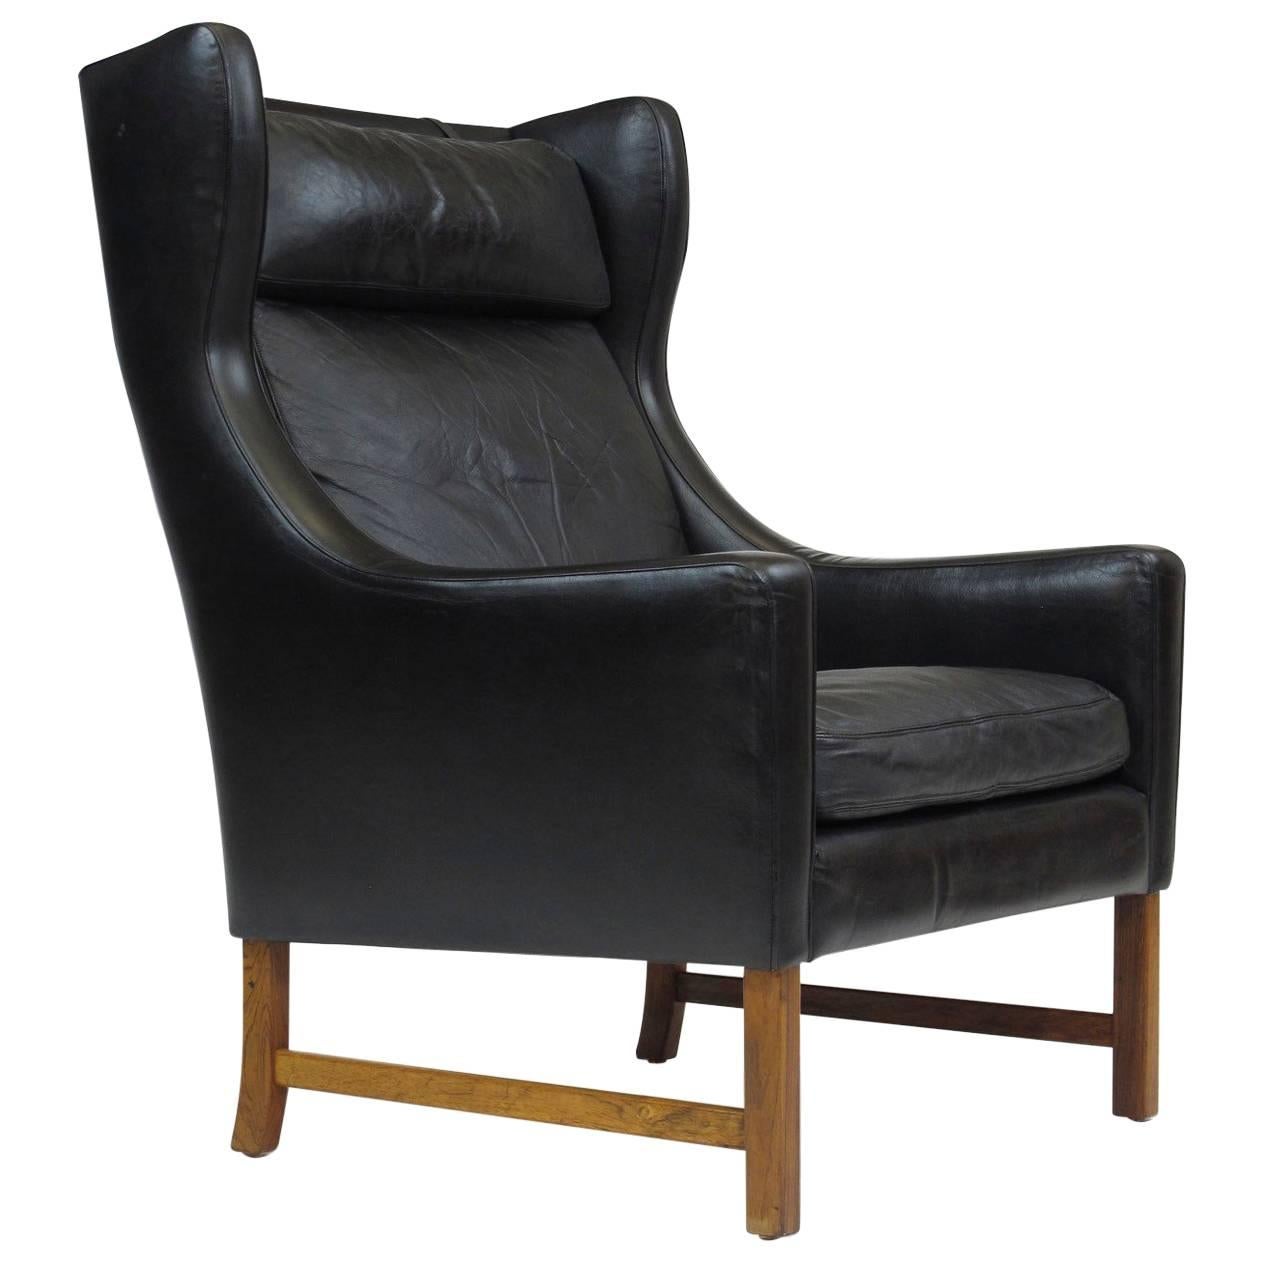 Fredrik Kayser Rosewood and Black Leather High-Back Danish Lounge Chair